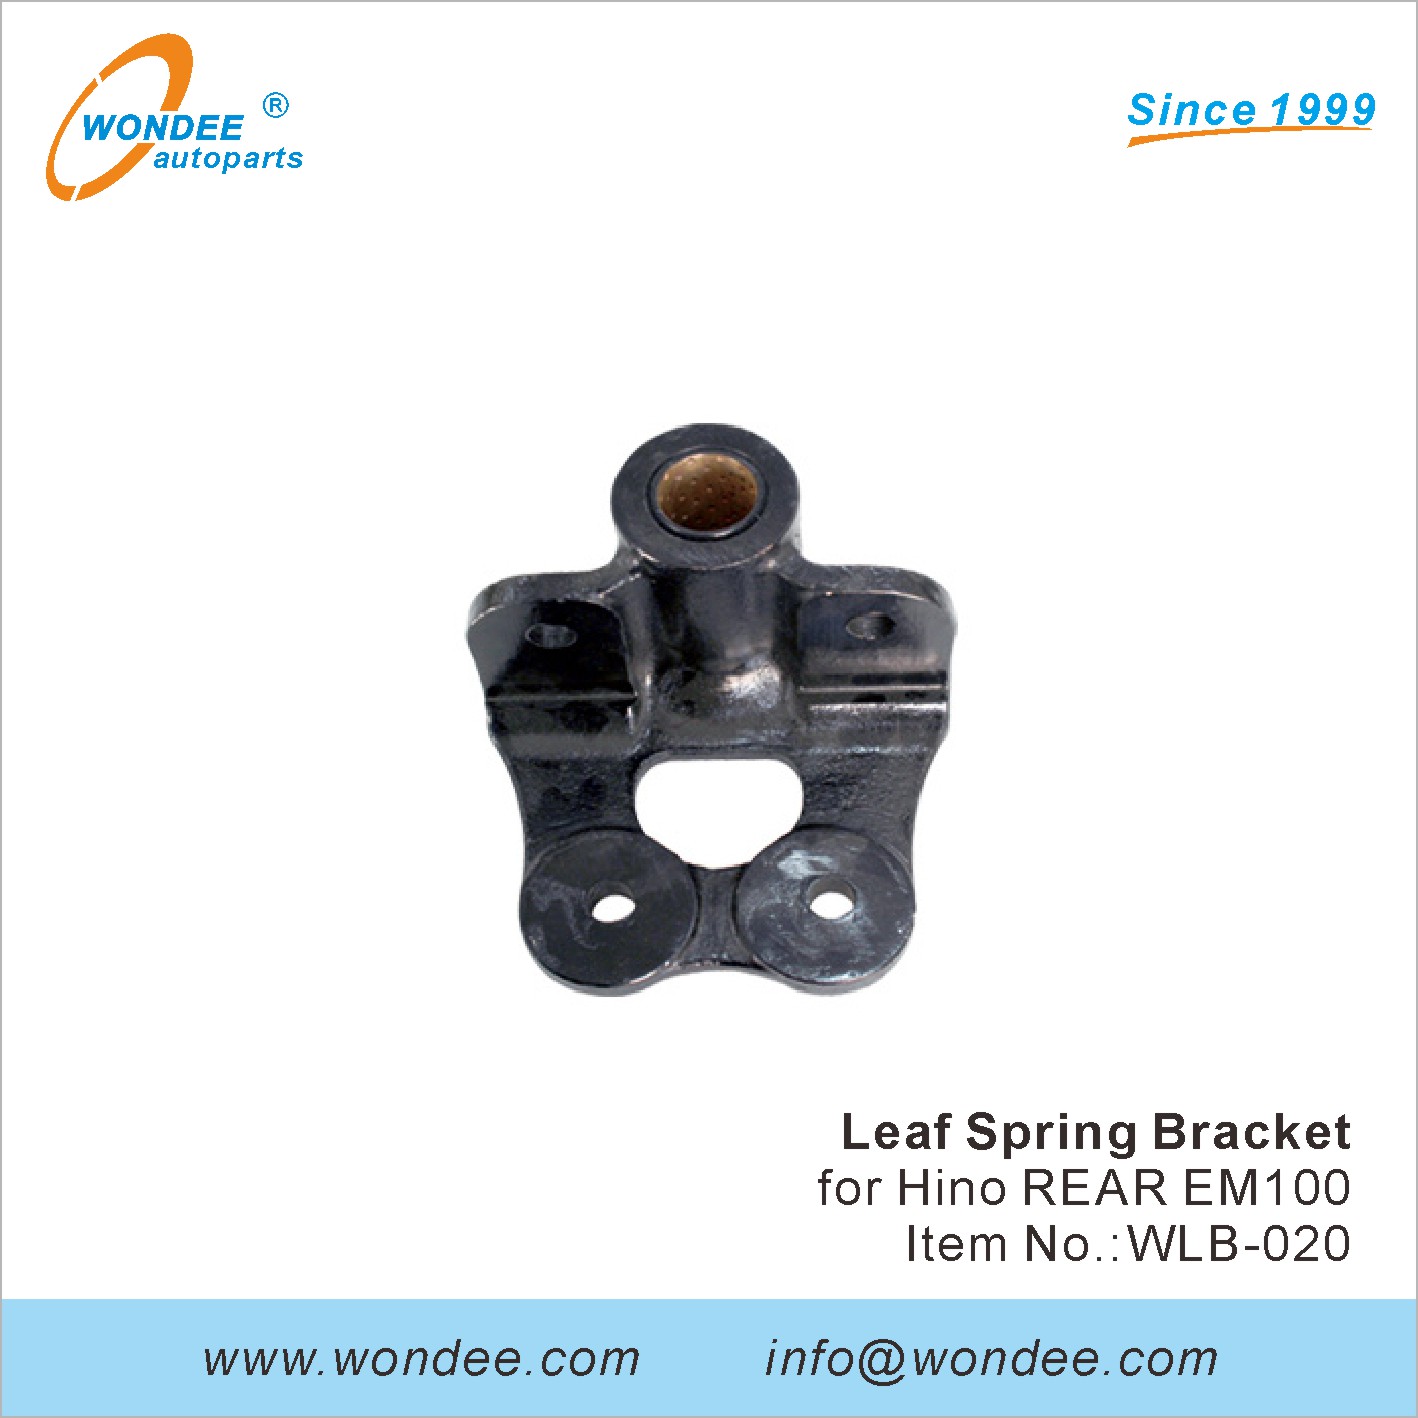 WONDEE leaf spring bracket (20)